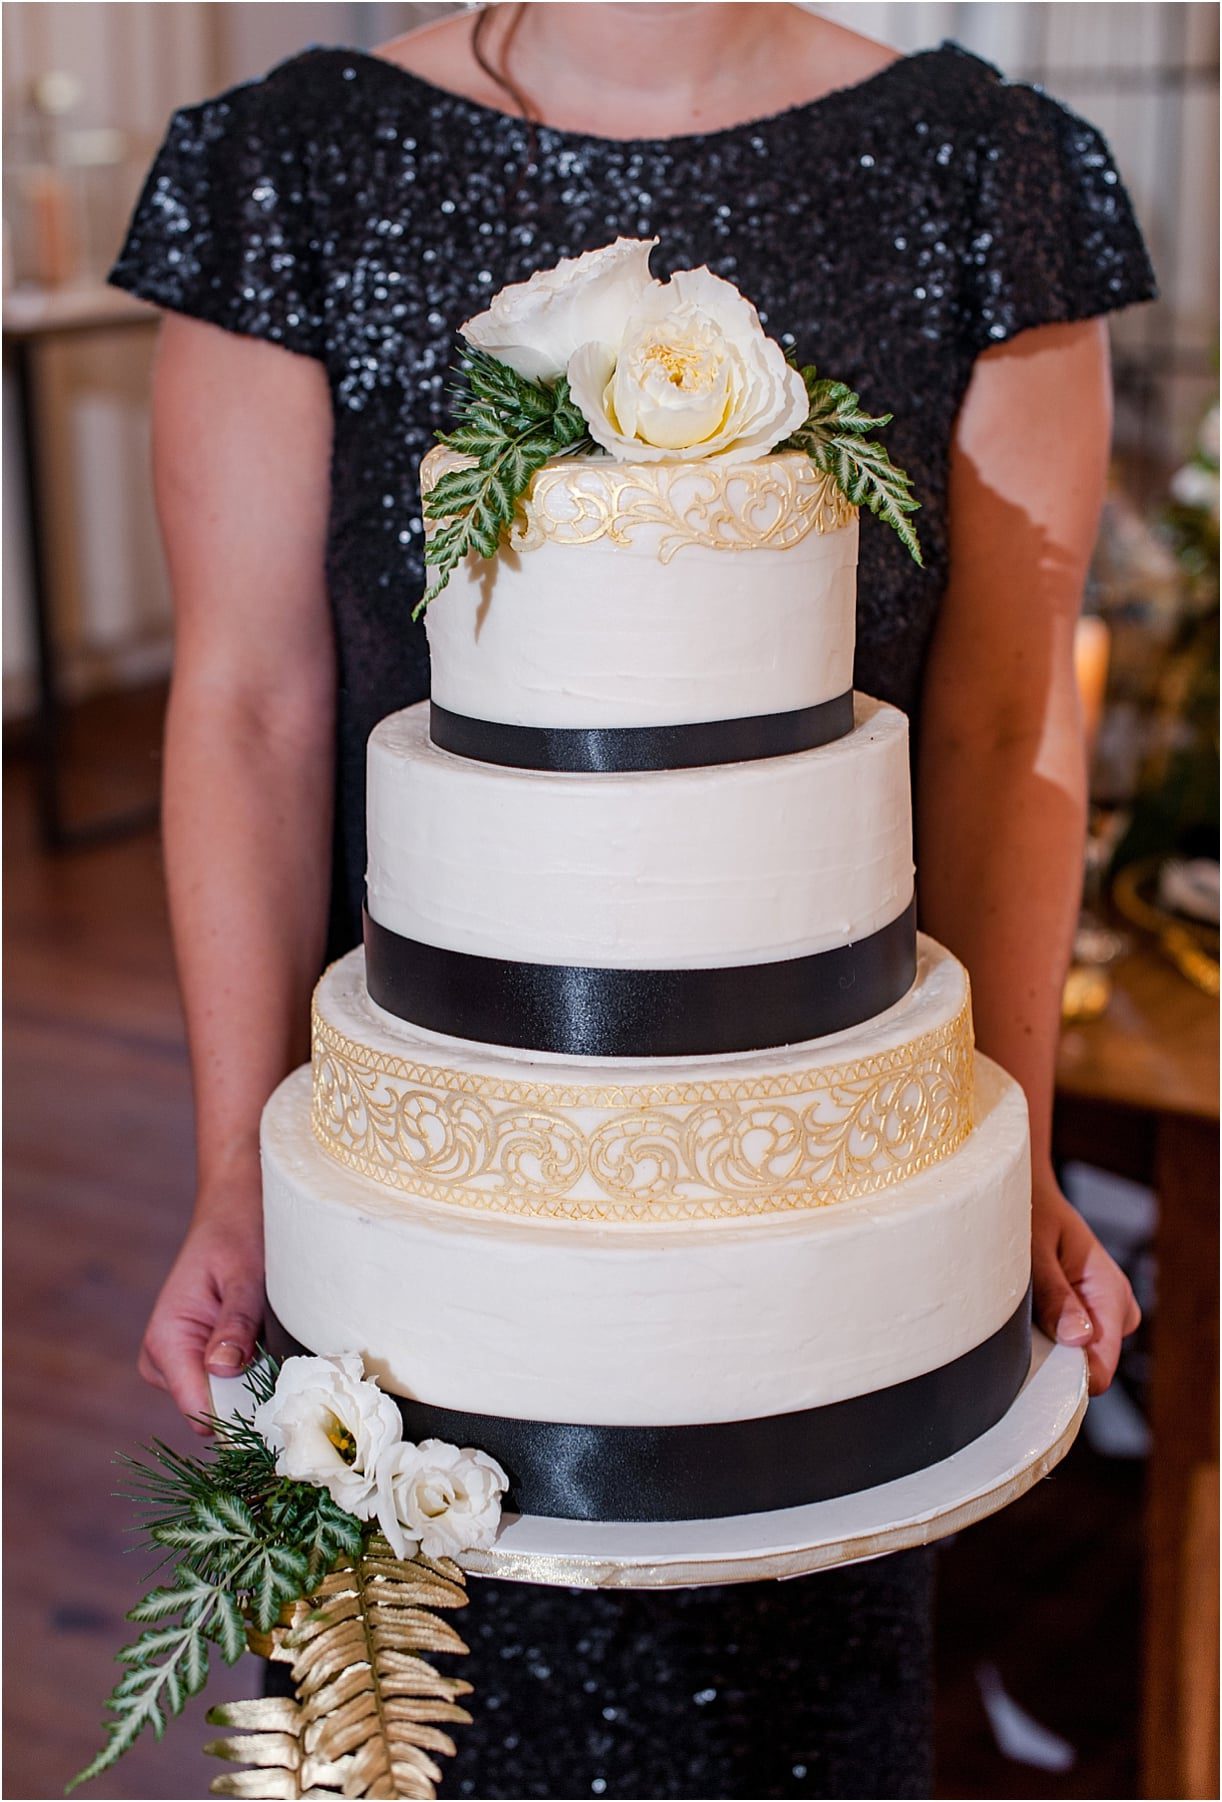 New Year's Eve Wedding Inspiration | Hill City Bride Virginia Wedding Blog - NYE Charlottesville Cake